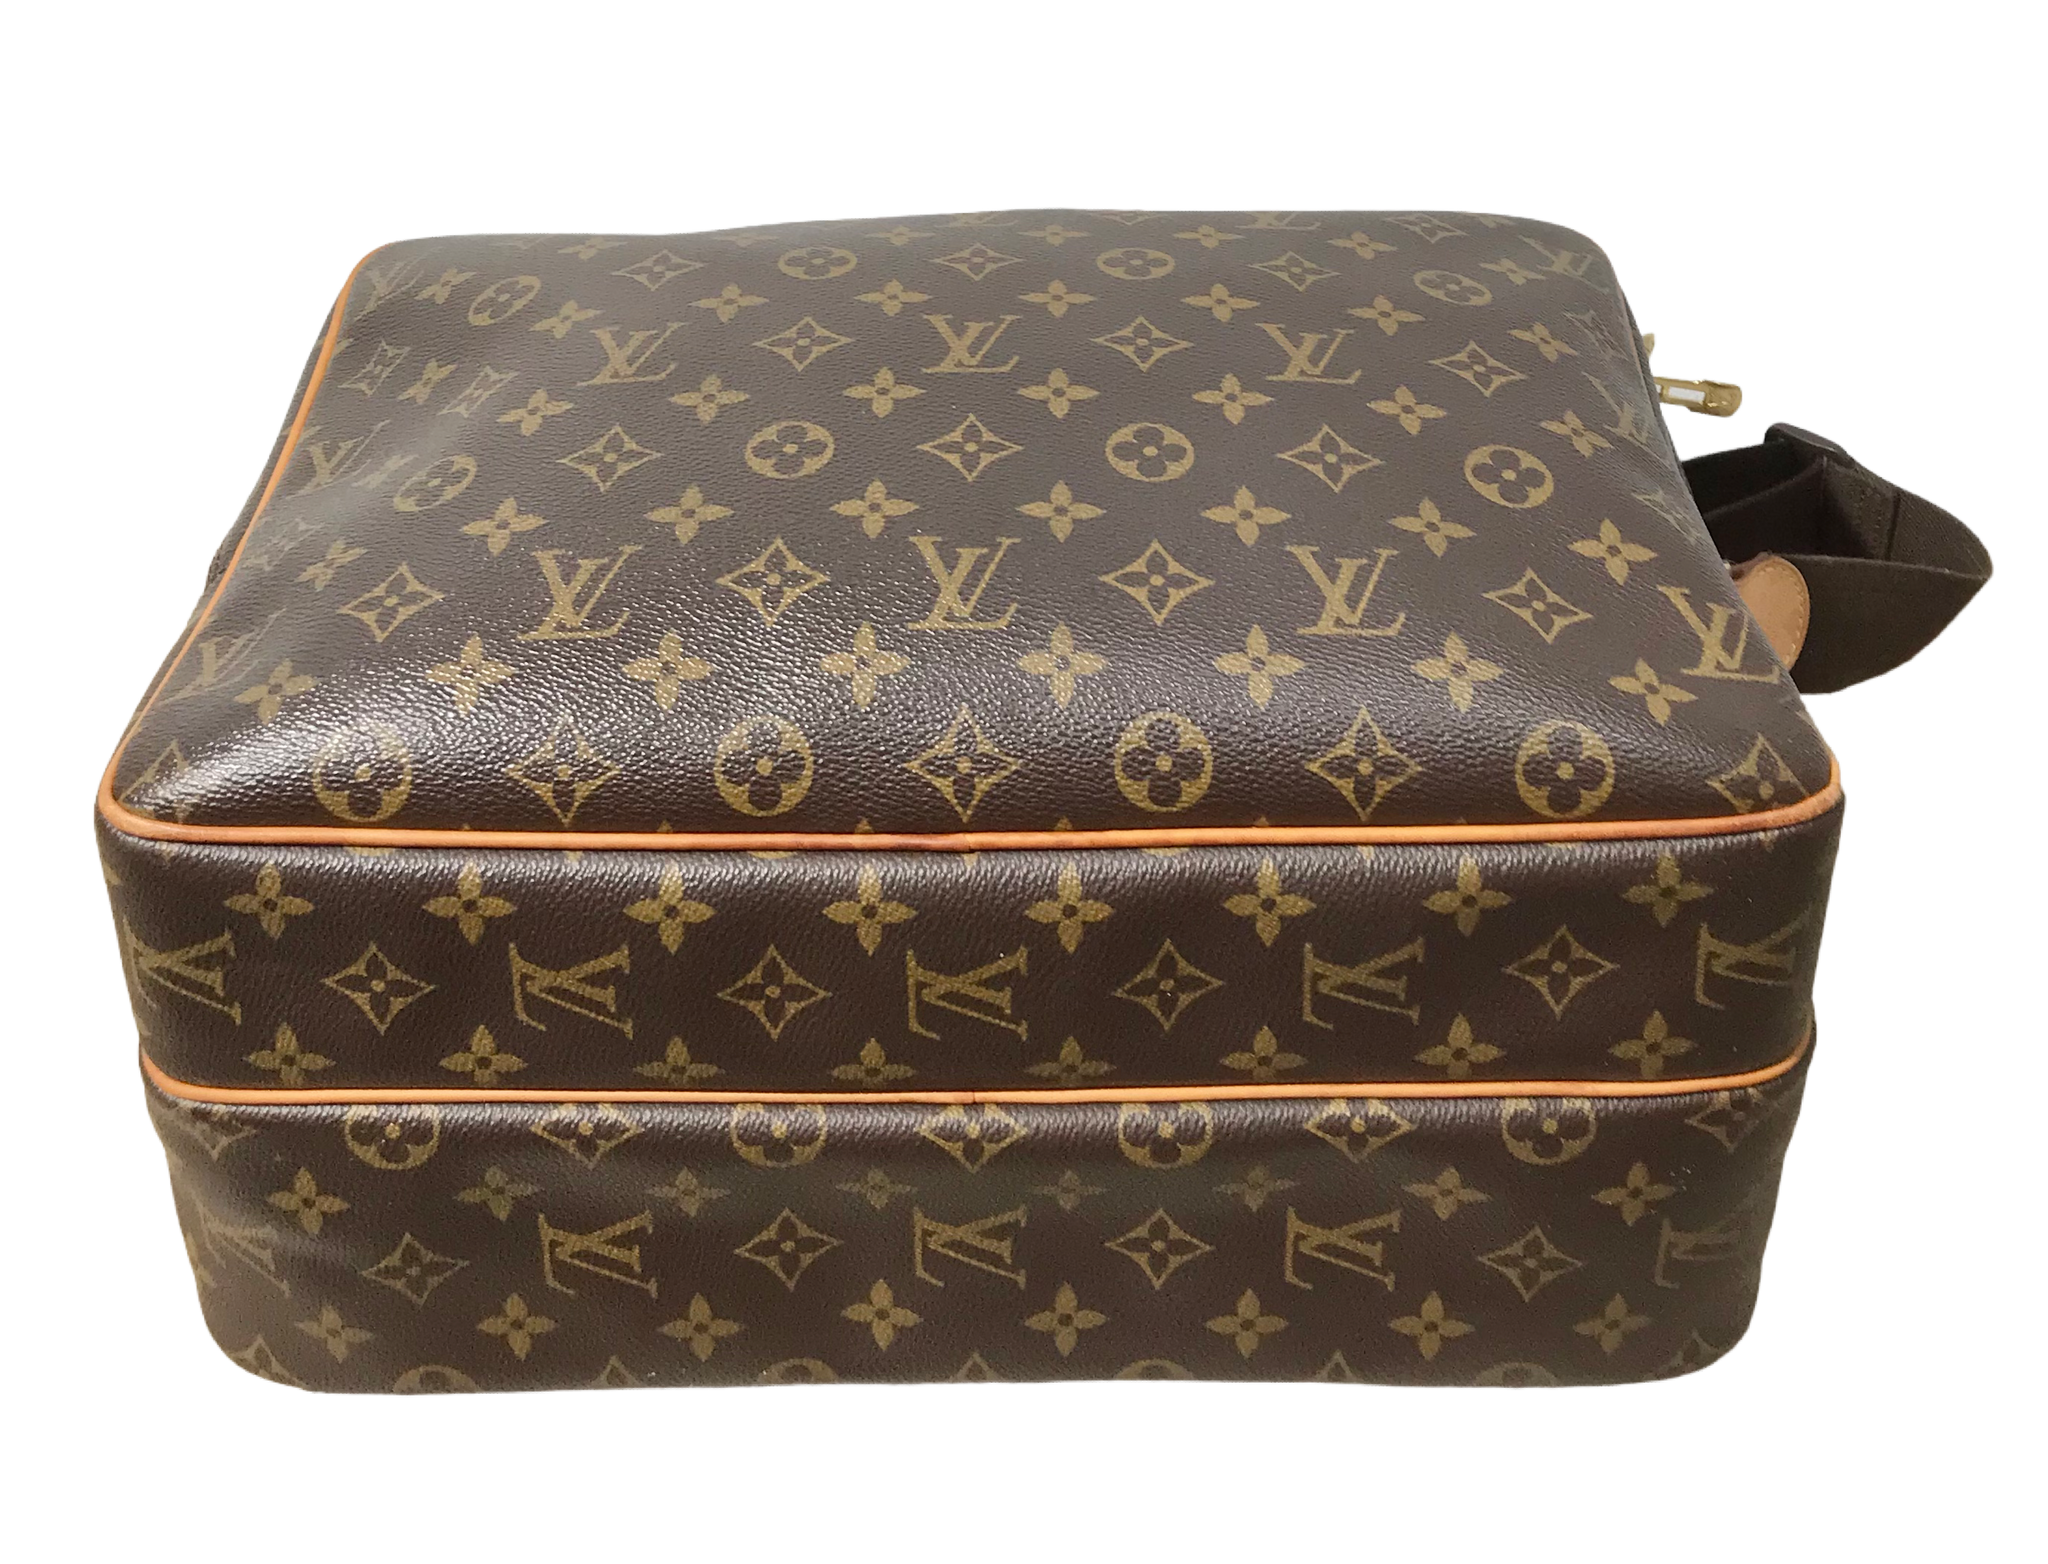 Vintage Louis Vuitton Monogram Reporter GM Messenger Bag E2302686